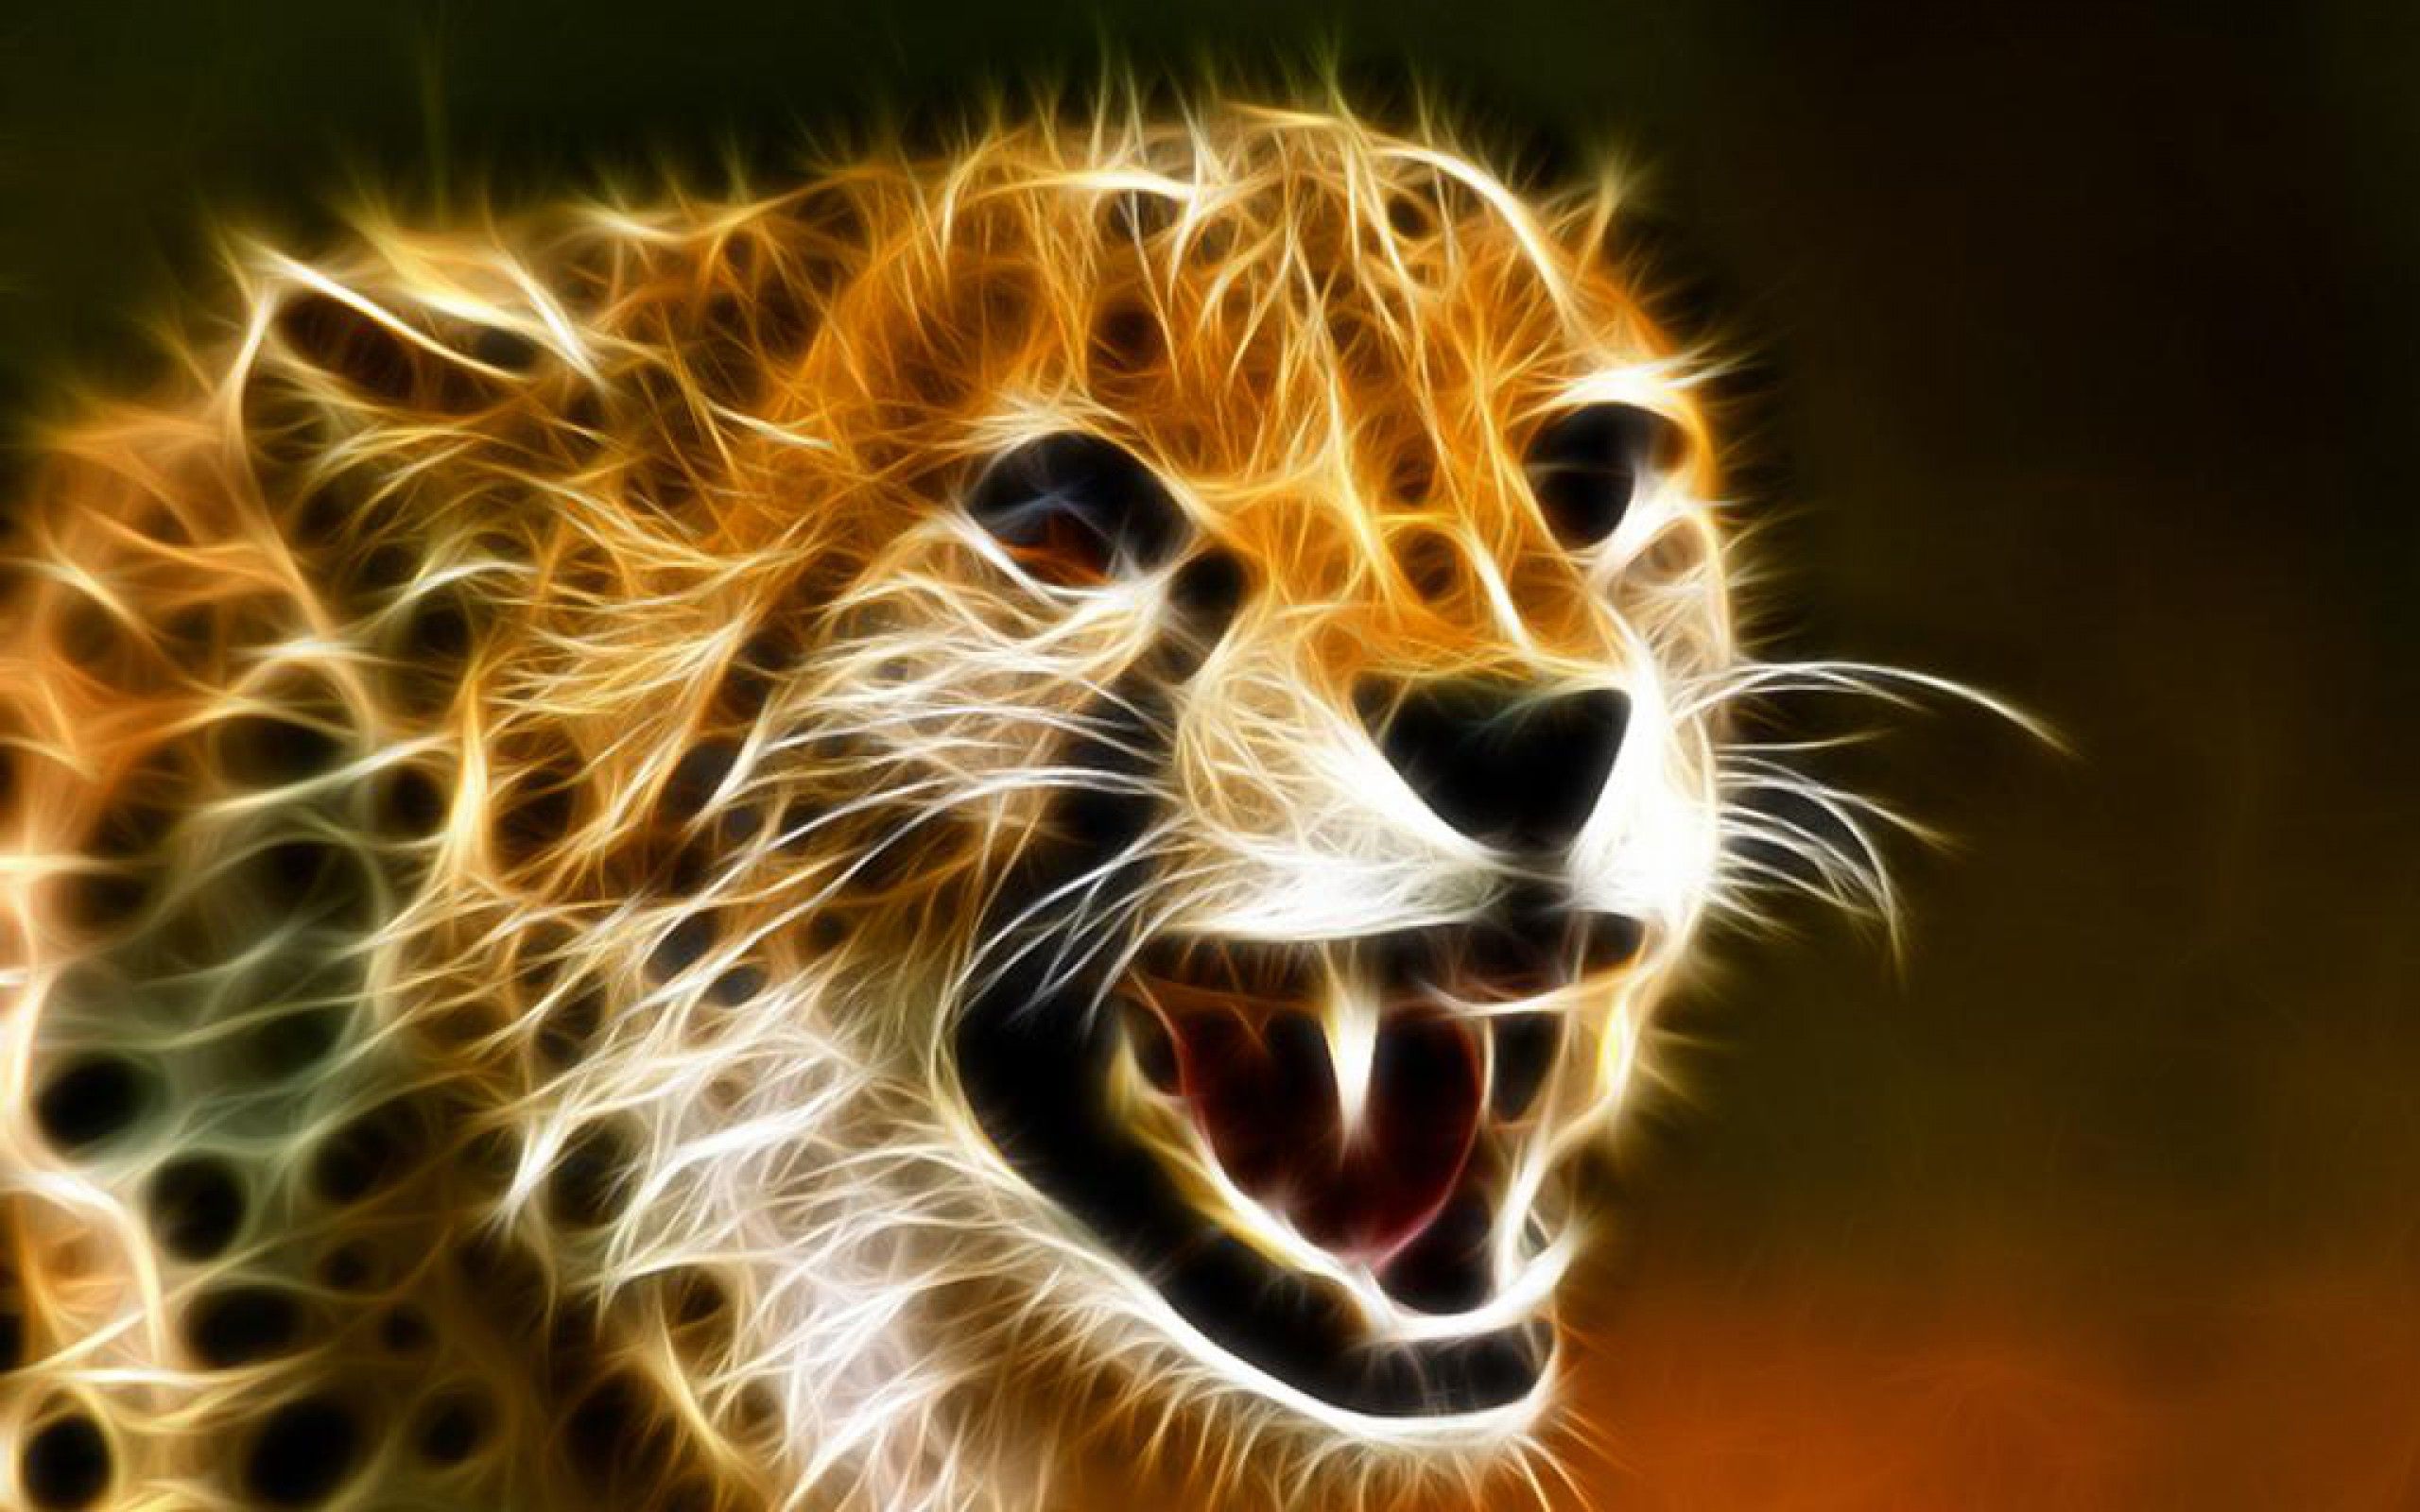 Cheetah Computer Wallpapers, Desktop Backgrounds 2560x1600 ID